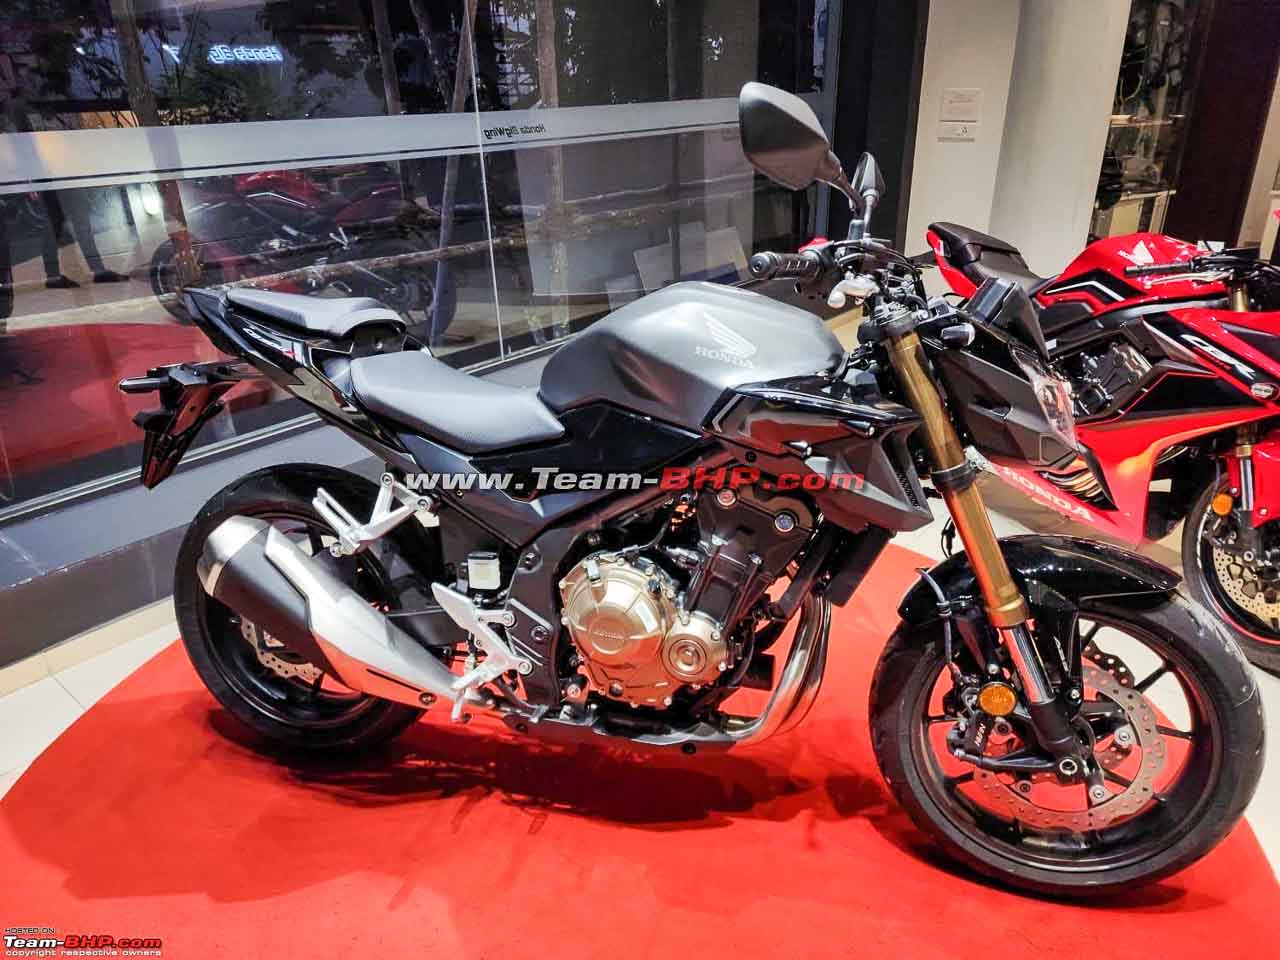 Honda CB 500F 2021 29A120677